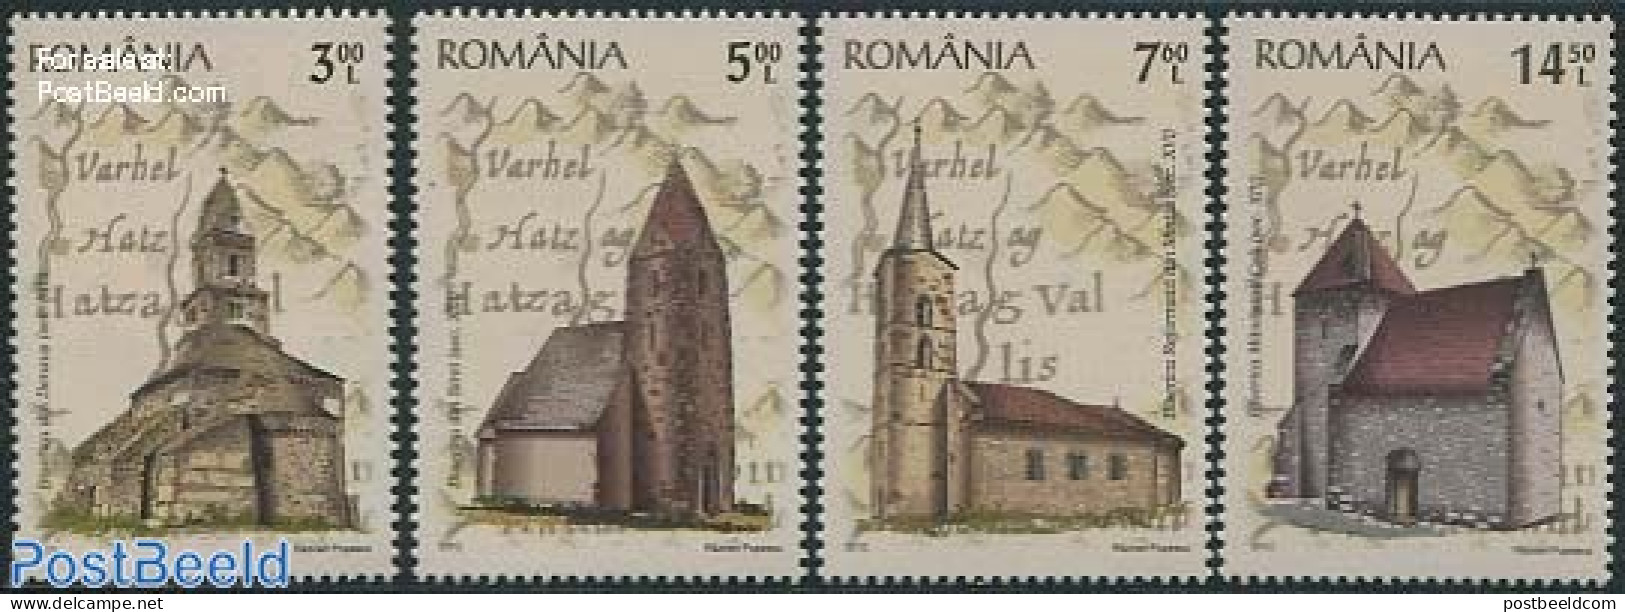 Romania 2012 Tara Hategului Church 4v, Mint NH, Religion - Churches, Temples, Mosques, Synagogues - Neufs